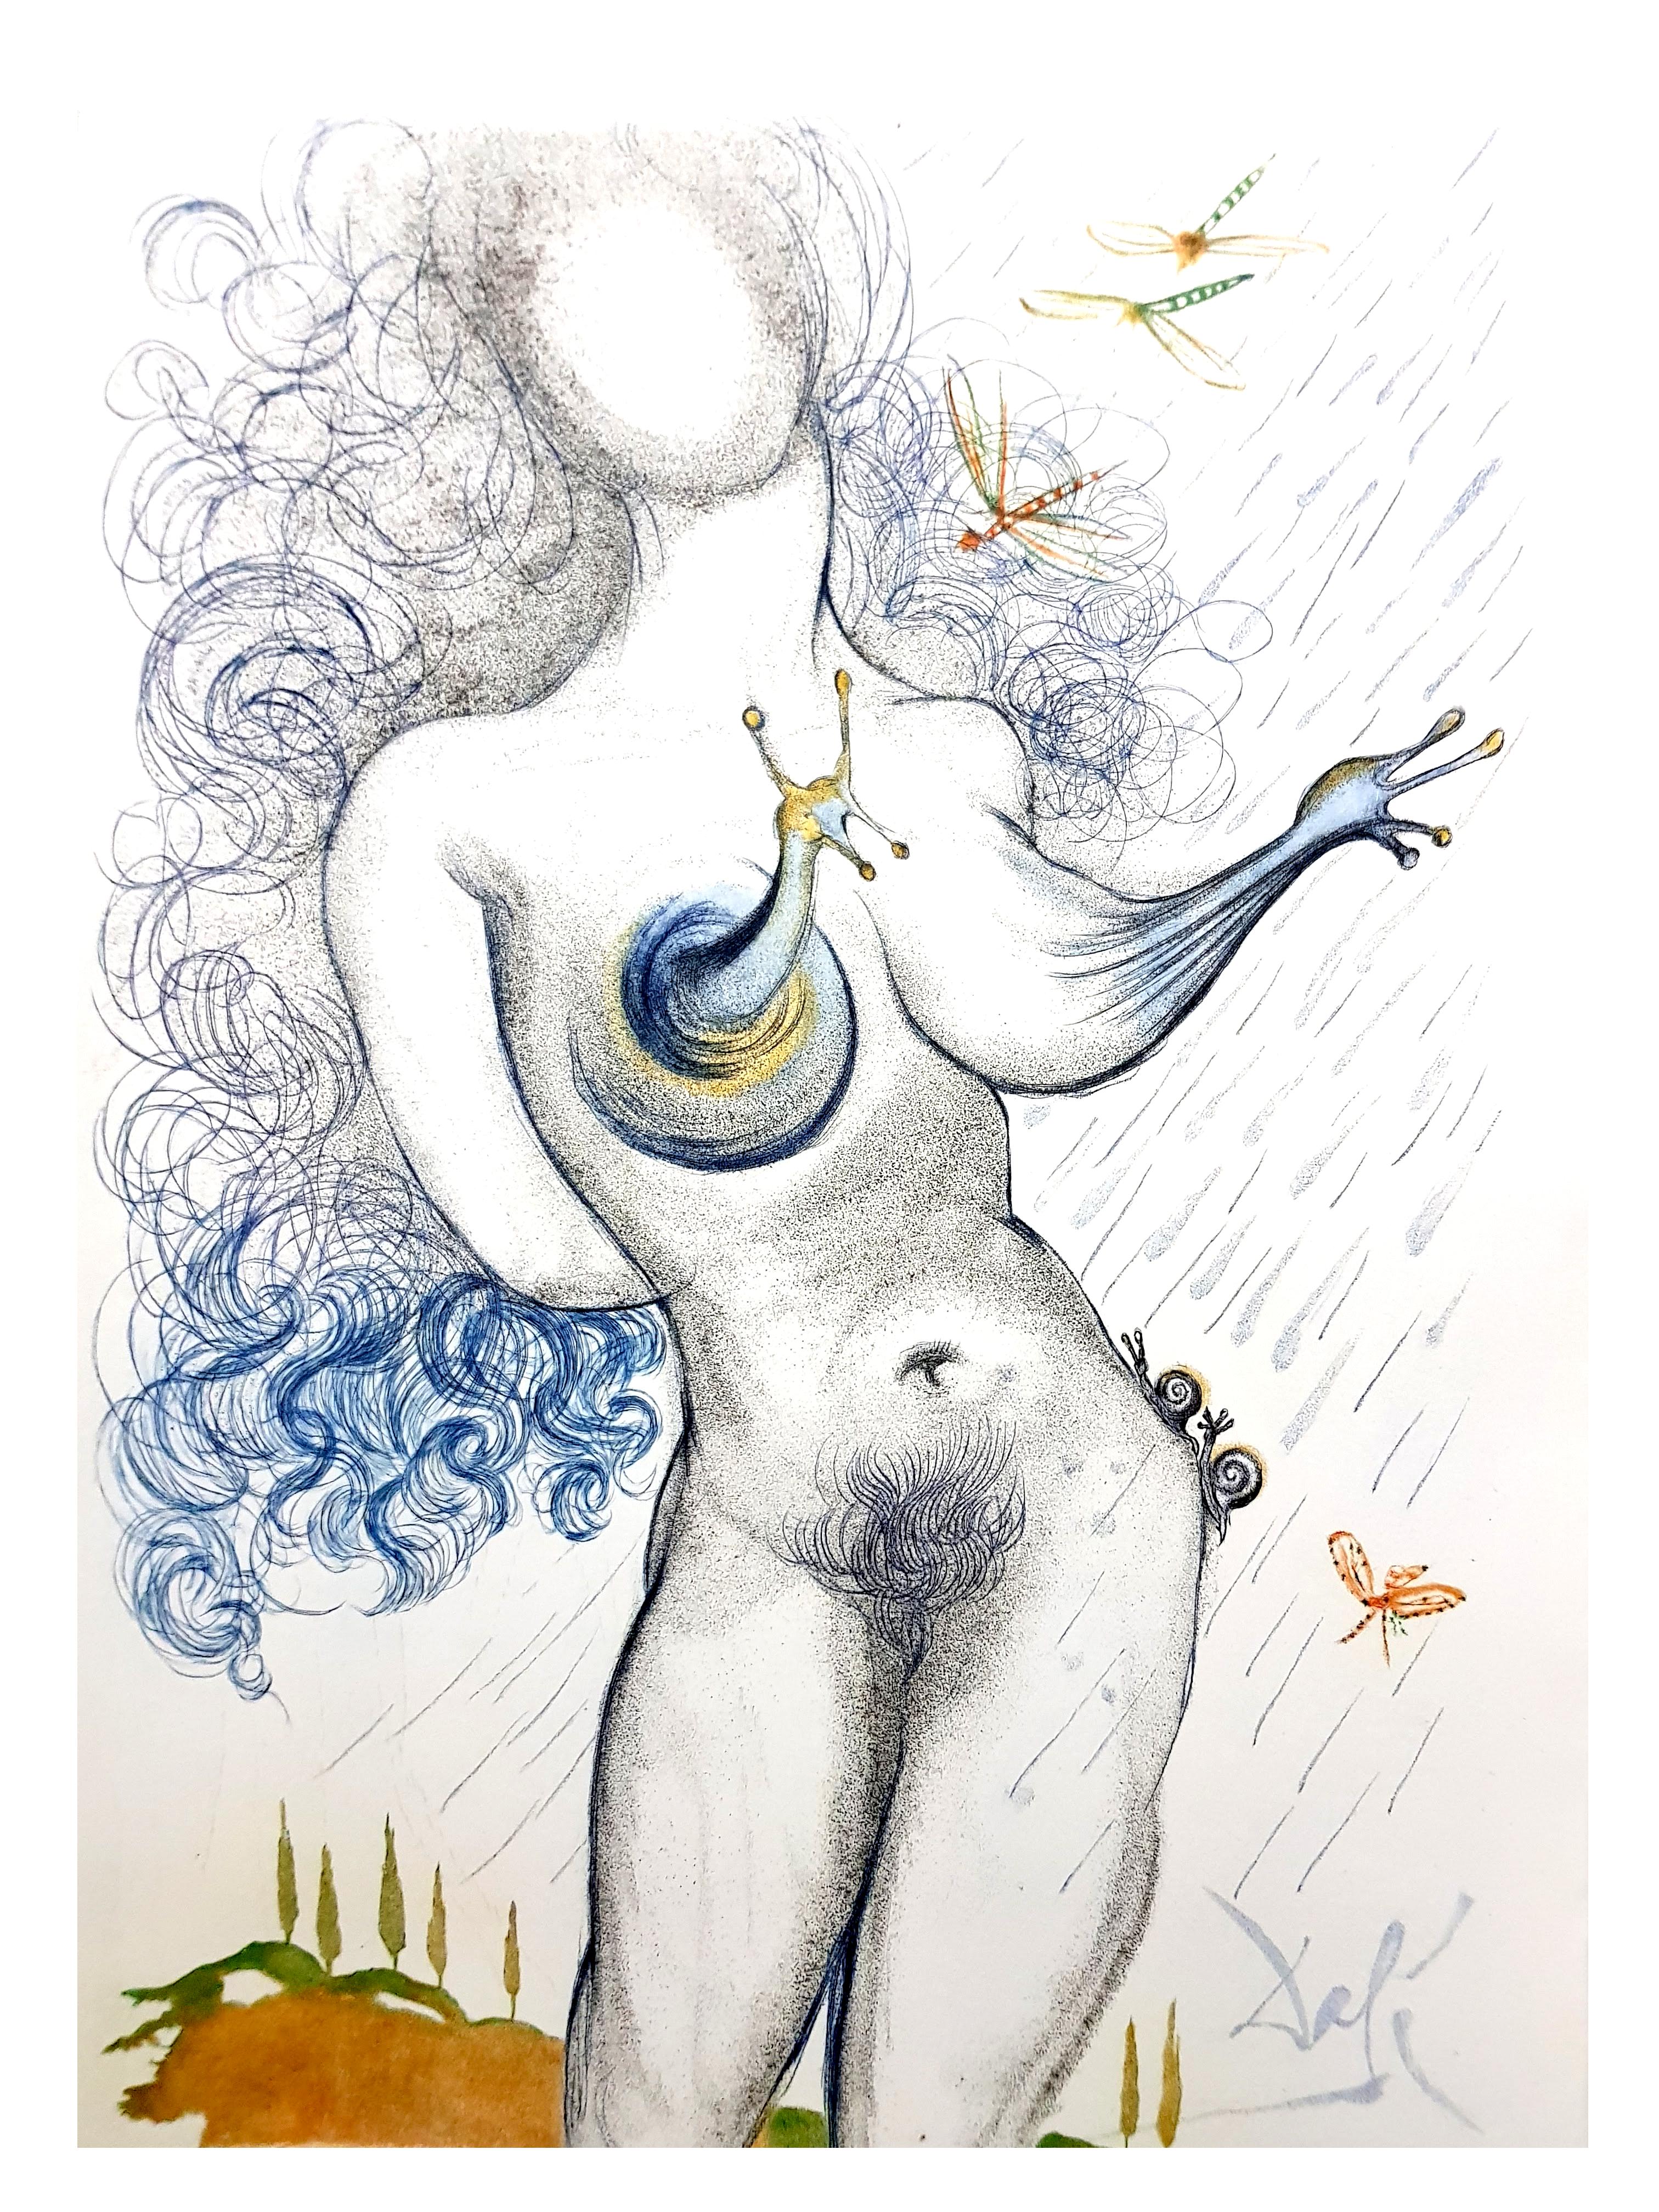 Salvador Dali - Nude with Snails Breats  - Surrealist Print by Salvador Dalí